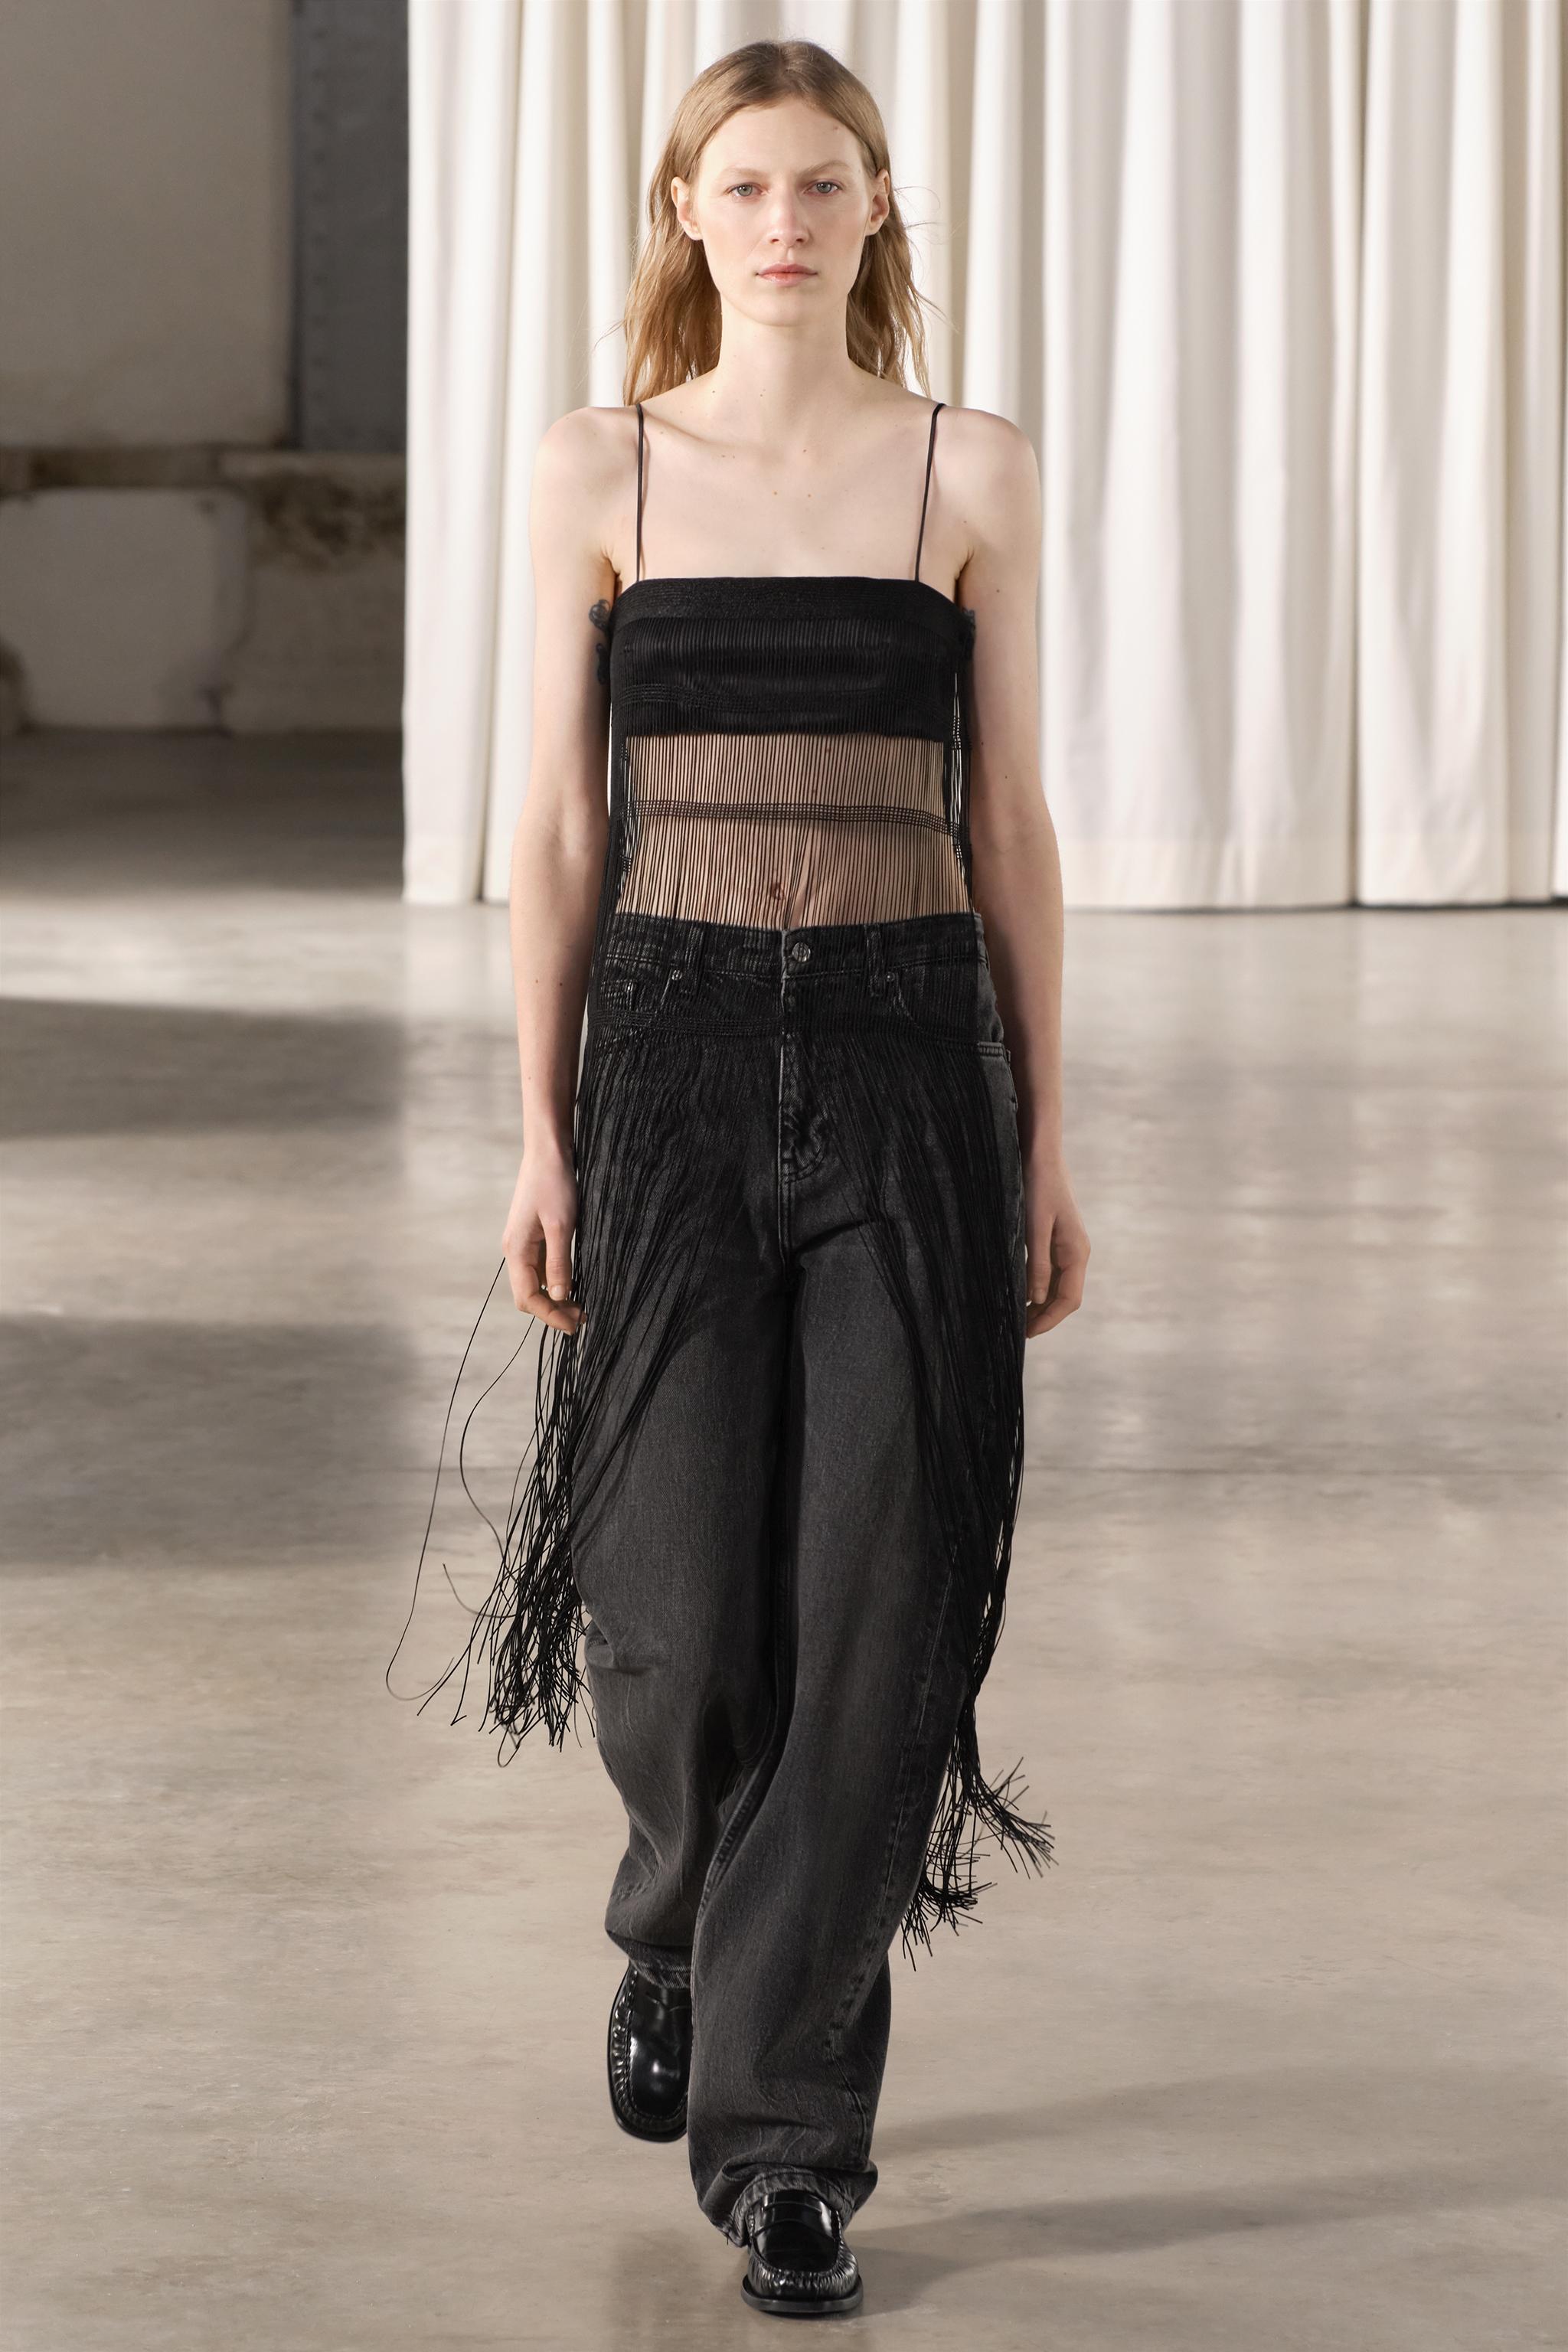 Zara - Zara Strapless Denim Top on Designer Wardrobe